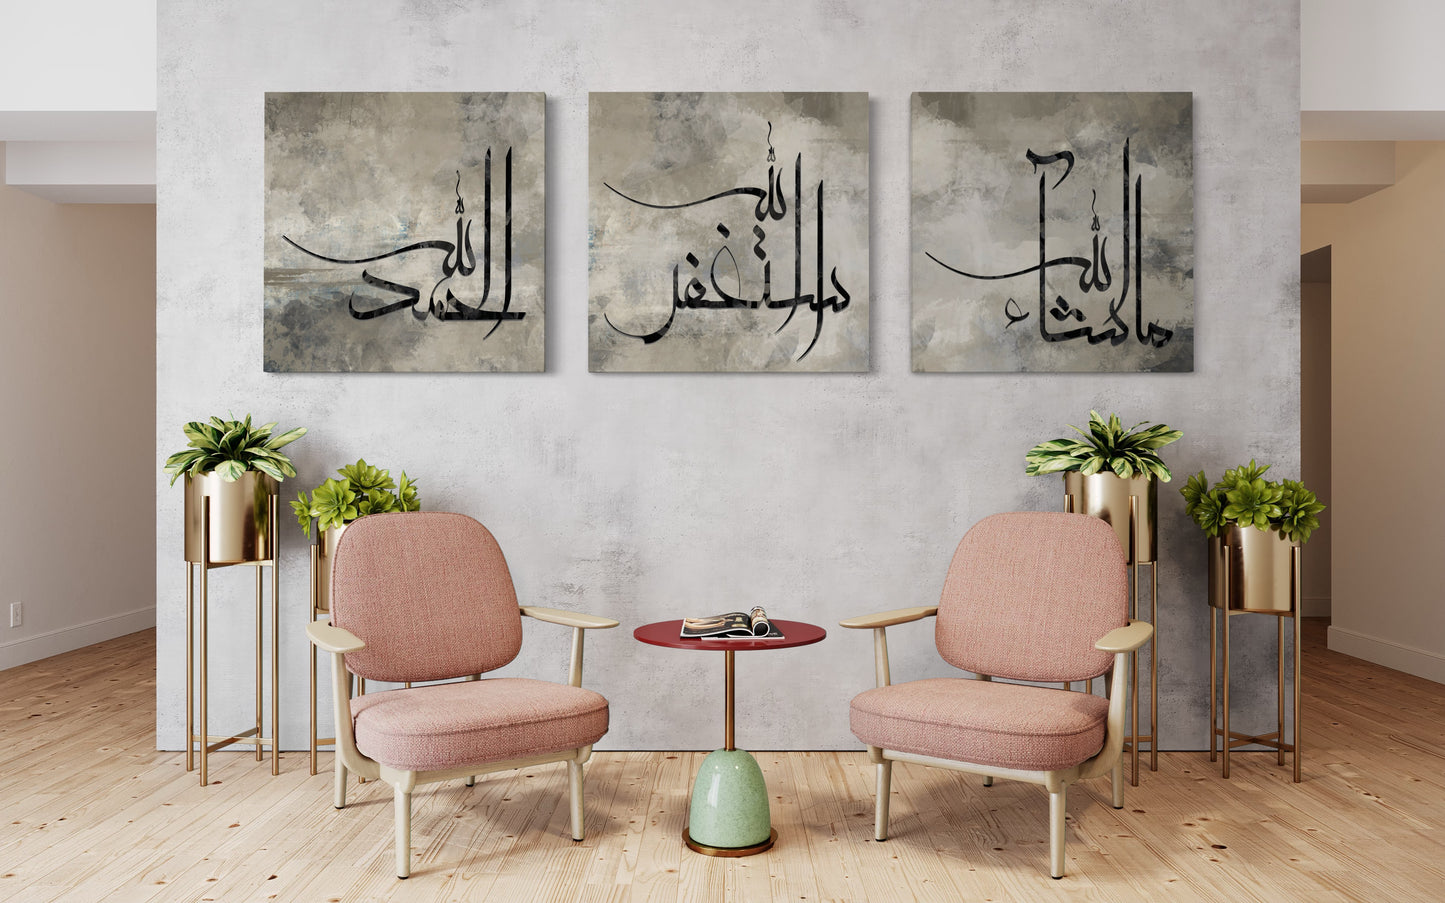 Set of 3 canvases Astagfirullah,Alhamdhu lillah, Masha Allah || Islamic modern Wall Art Print on canvas